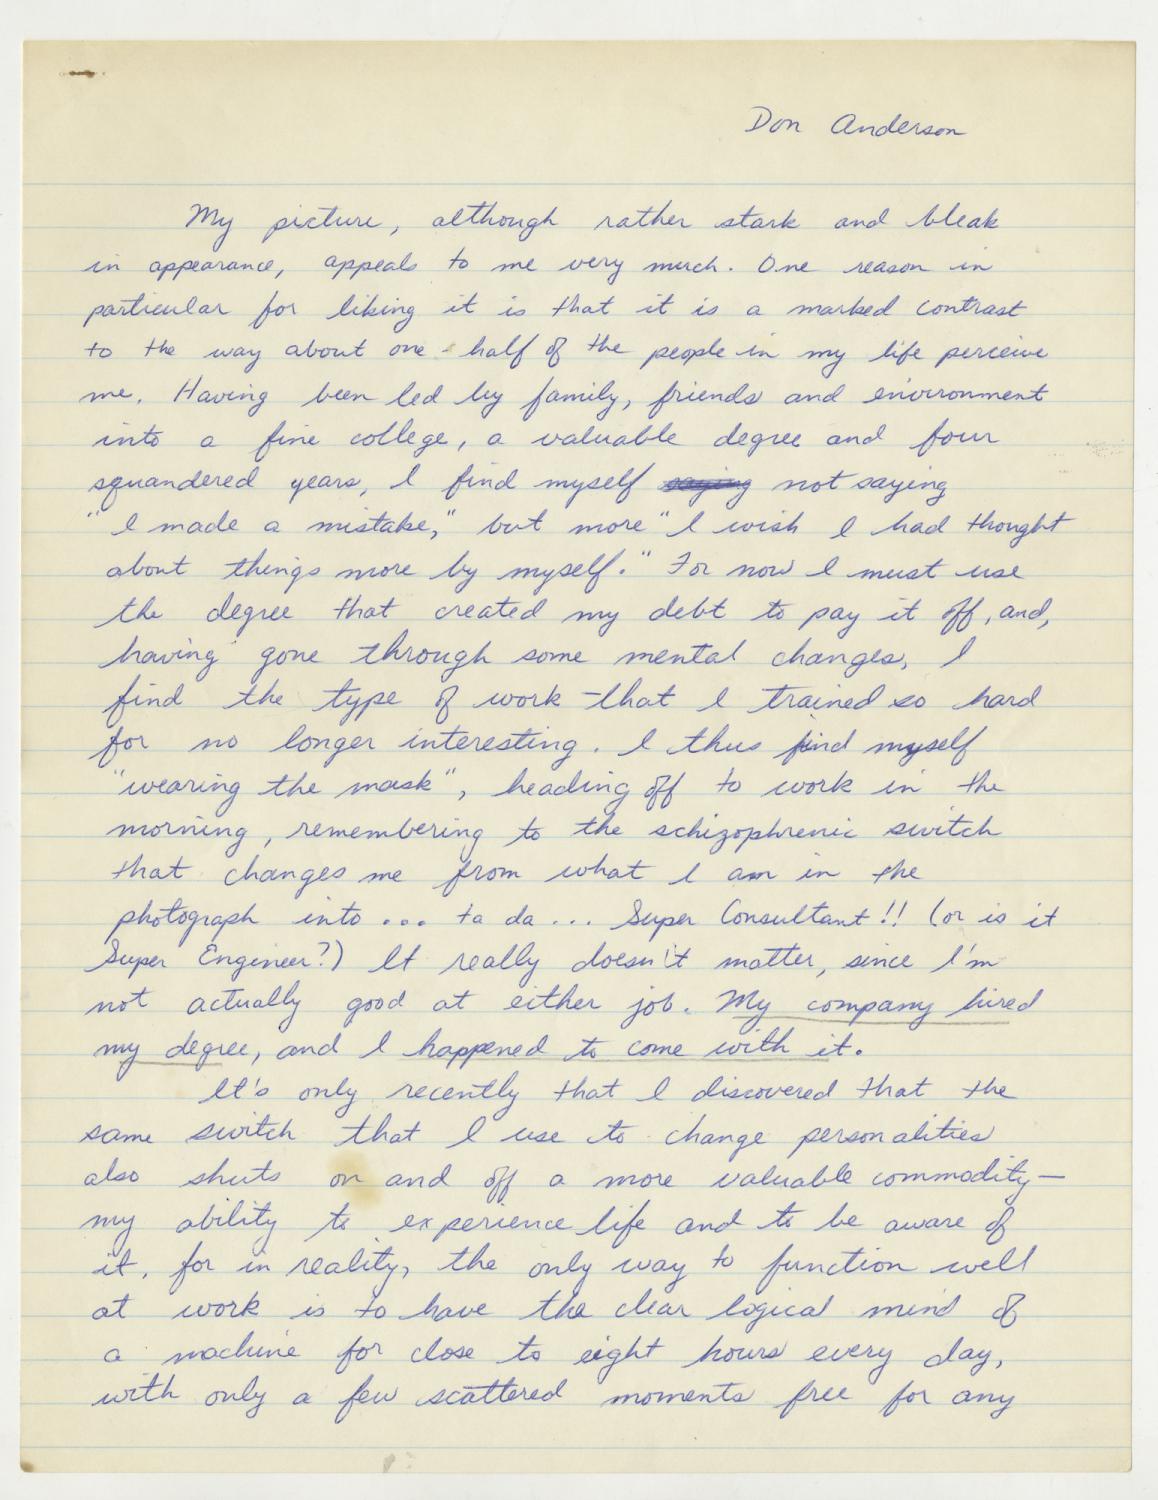 Don Letter. 44 Irving Street, Cambridge, MA. 1971.